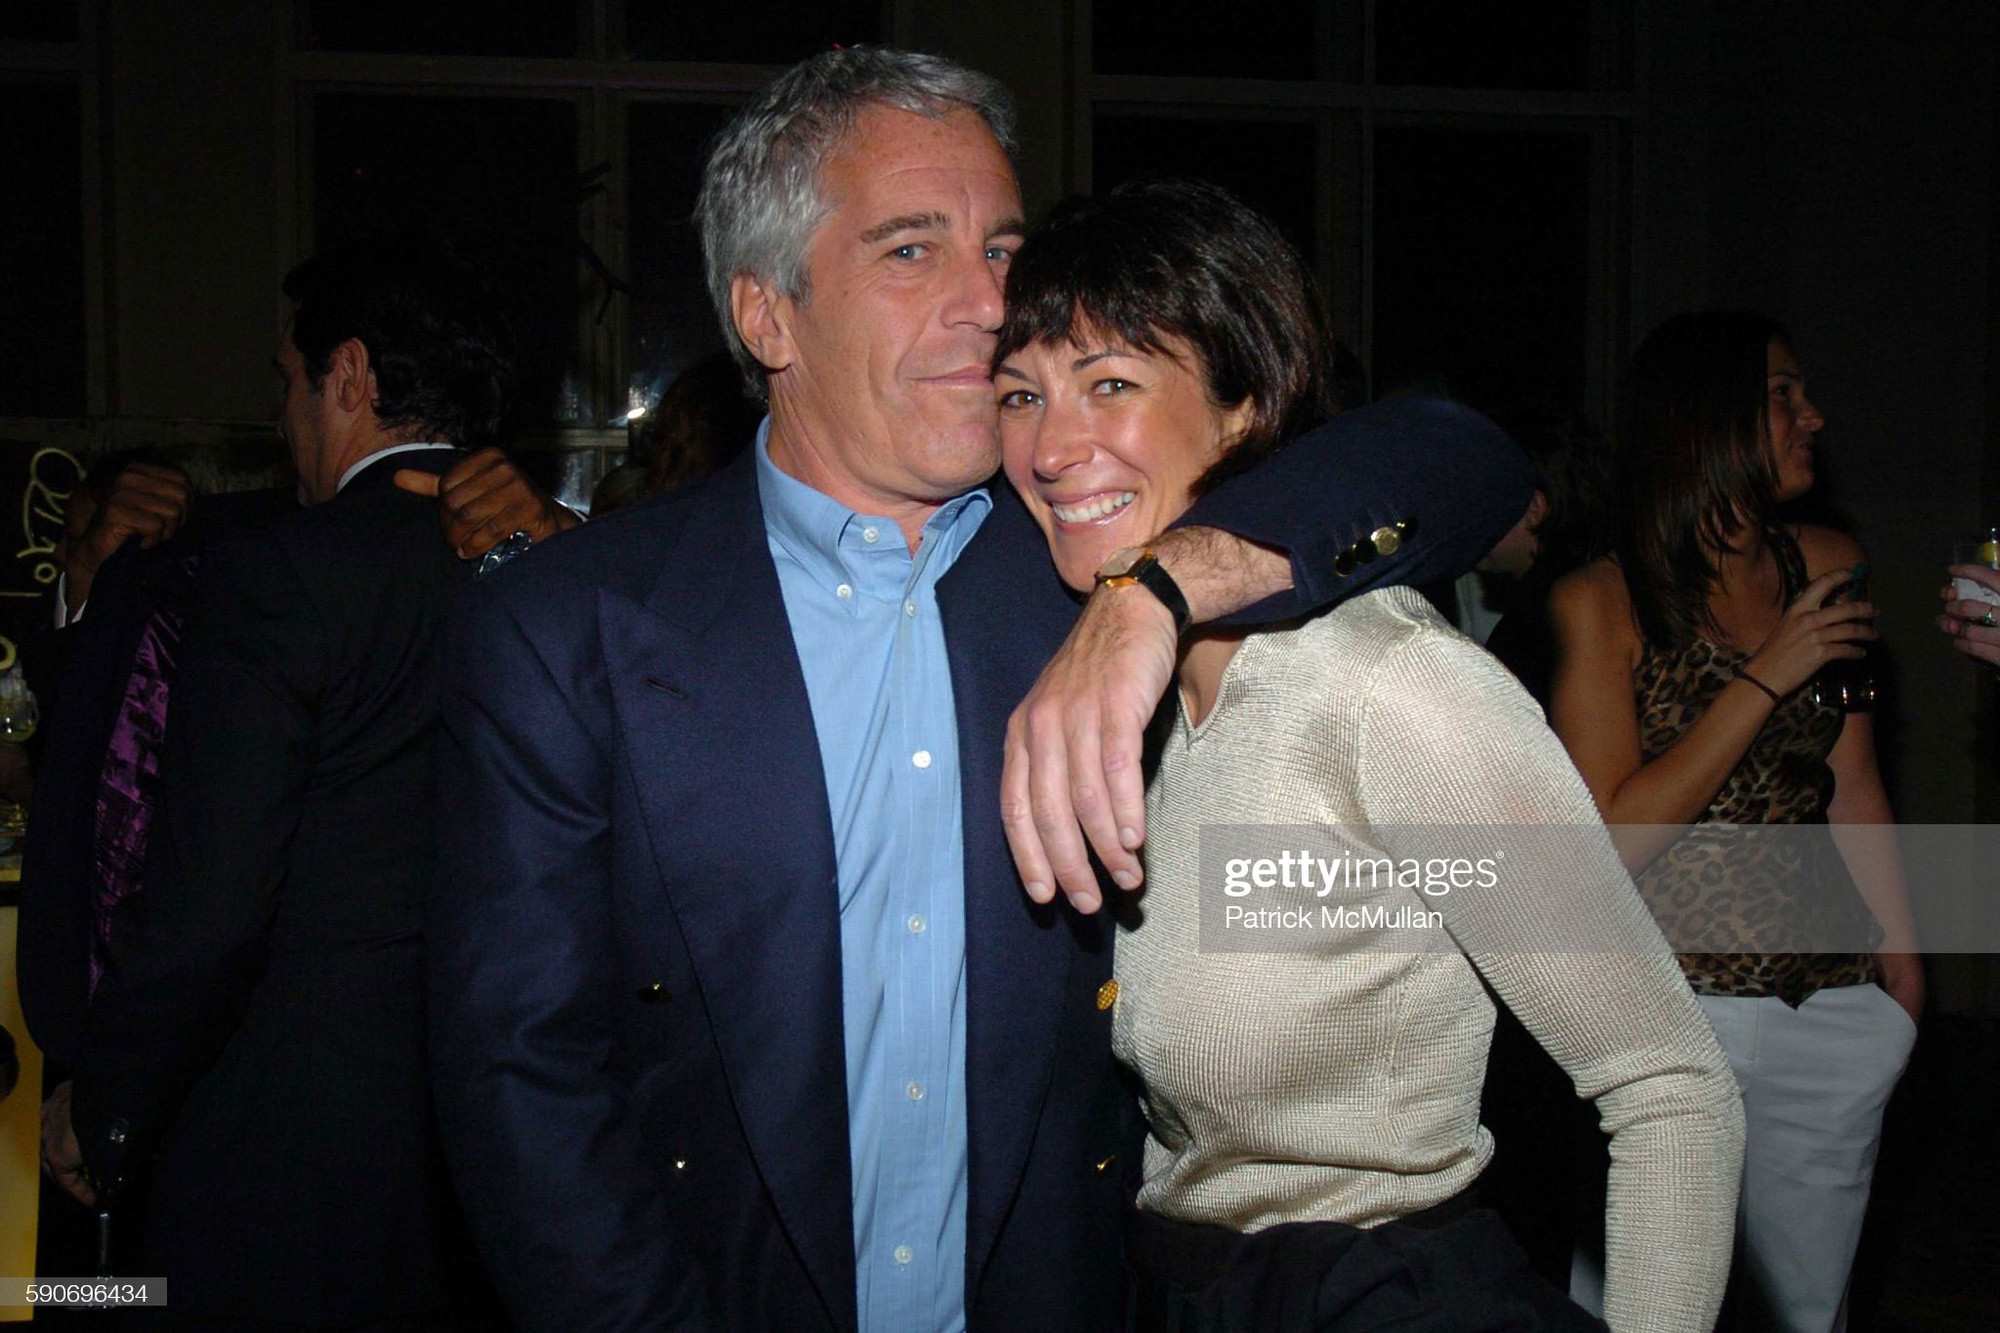 Jeffrey Epstein en Ghislaine Maxwell in New York in 2005, GettyImages